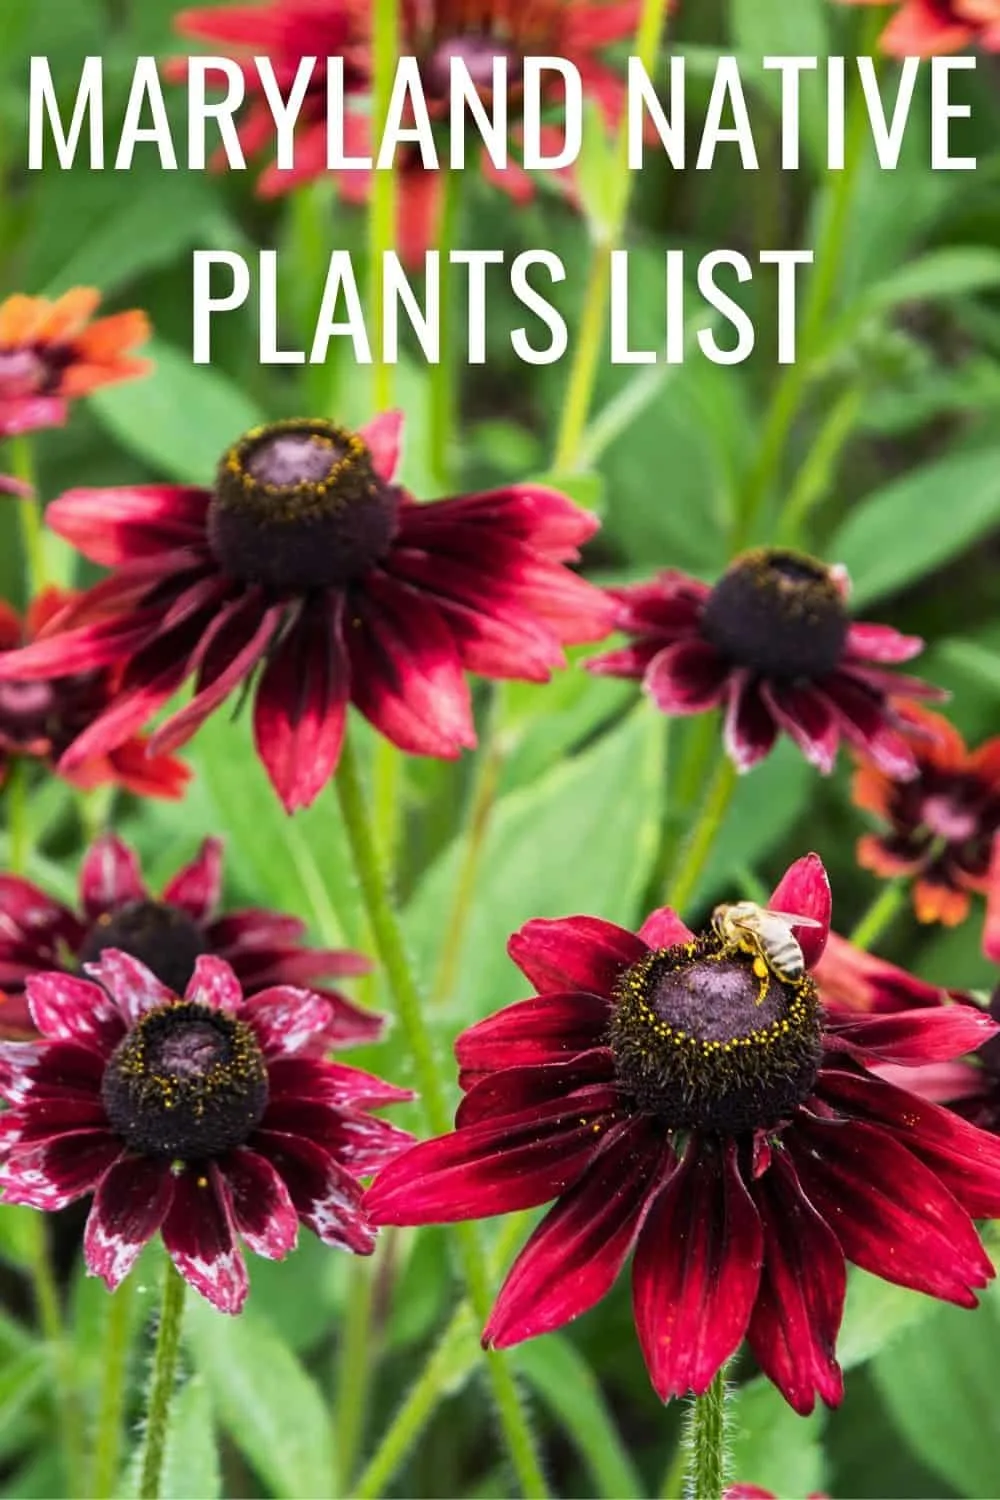 Maryland native plants list